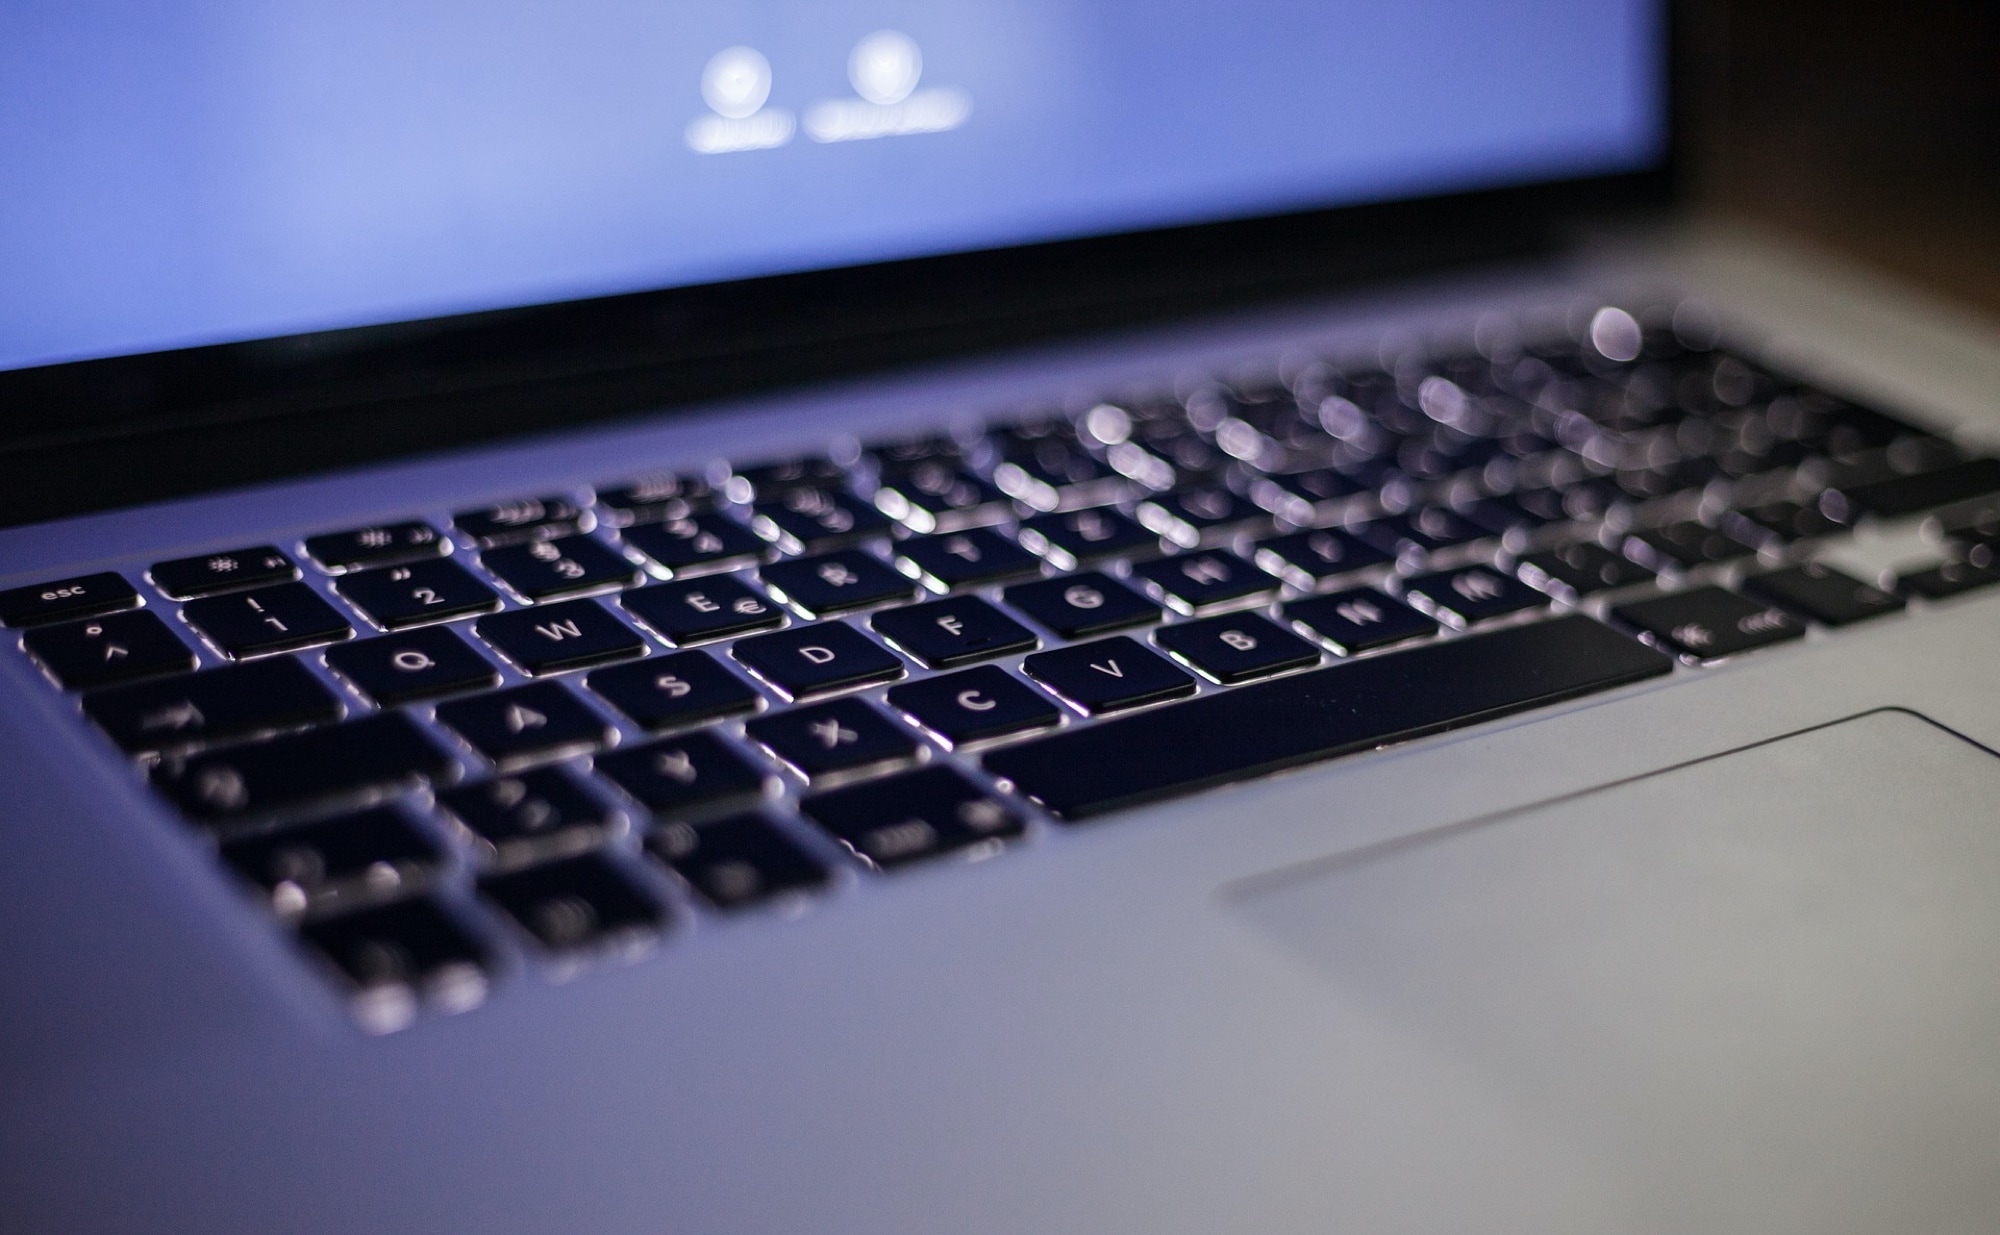 MacBook backlit keyboard - Firefox keyboard shortcuts